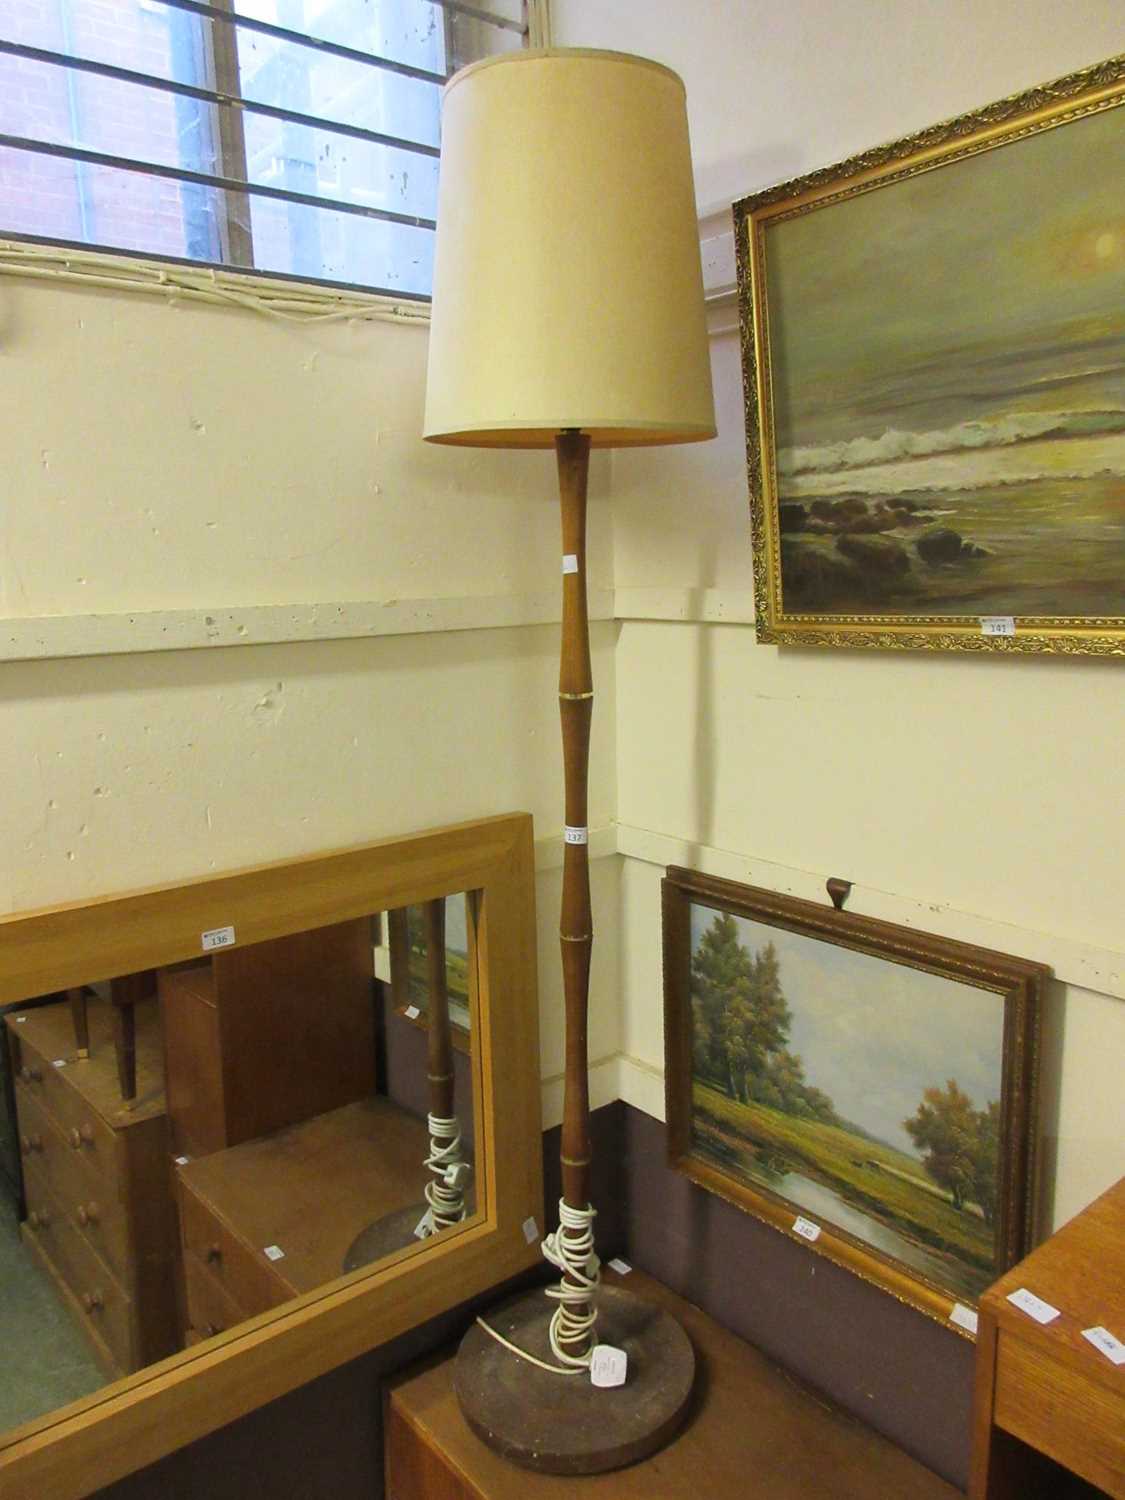 A mid-20th century teak standard lamp